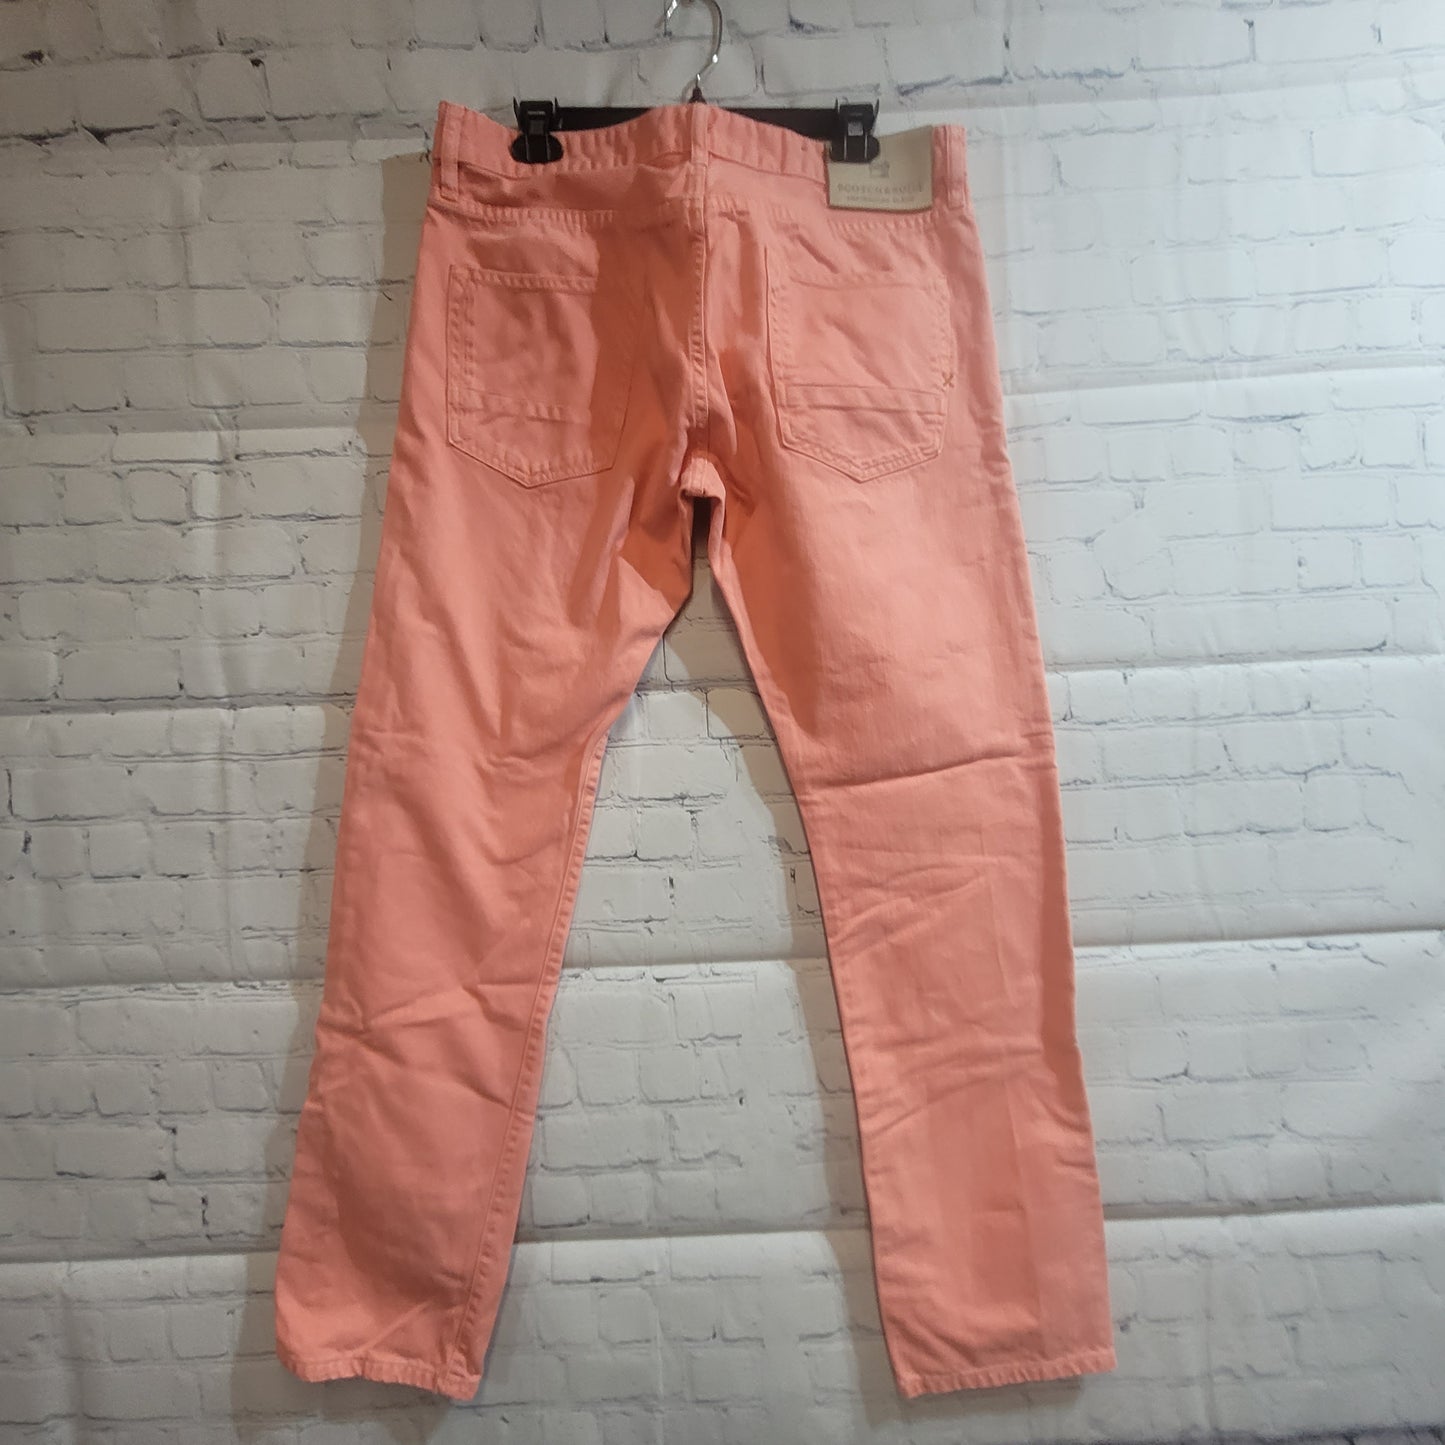 Scotch & Soda Amsterdams Blauw Ralston Pants with Pocket Pink - 34